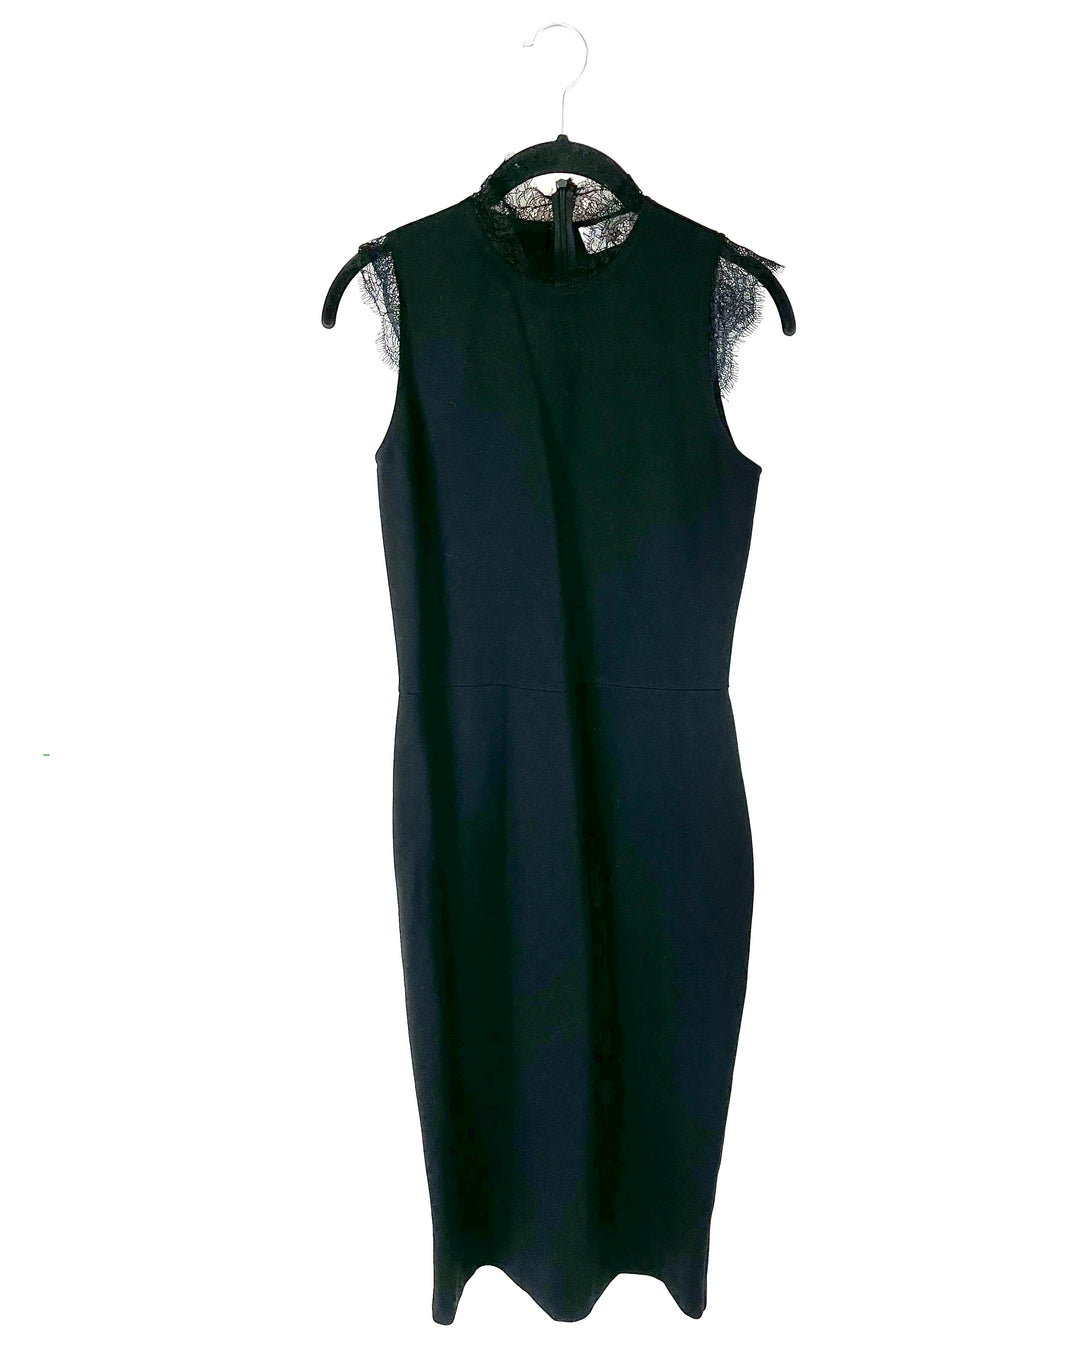 Black Sleeveless Midi Dress - Size 4-6